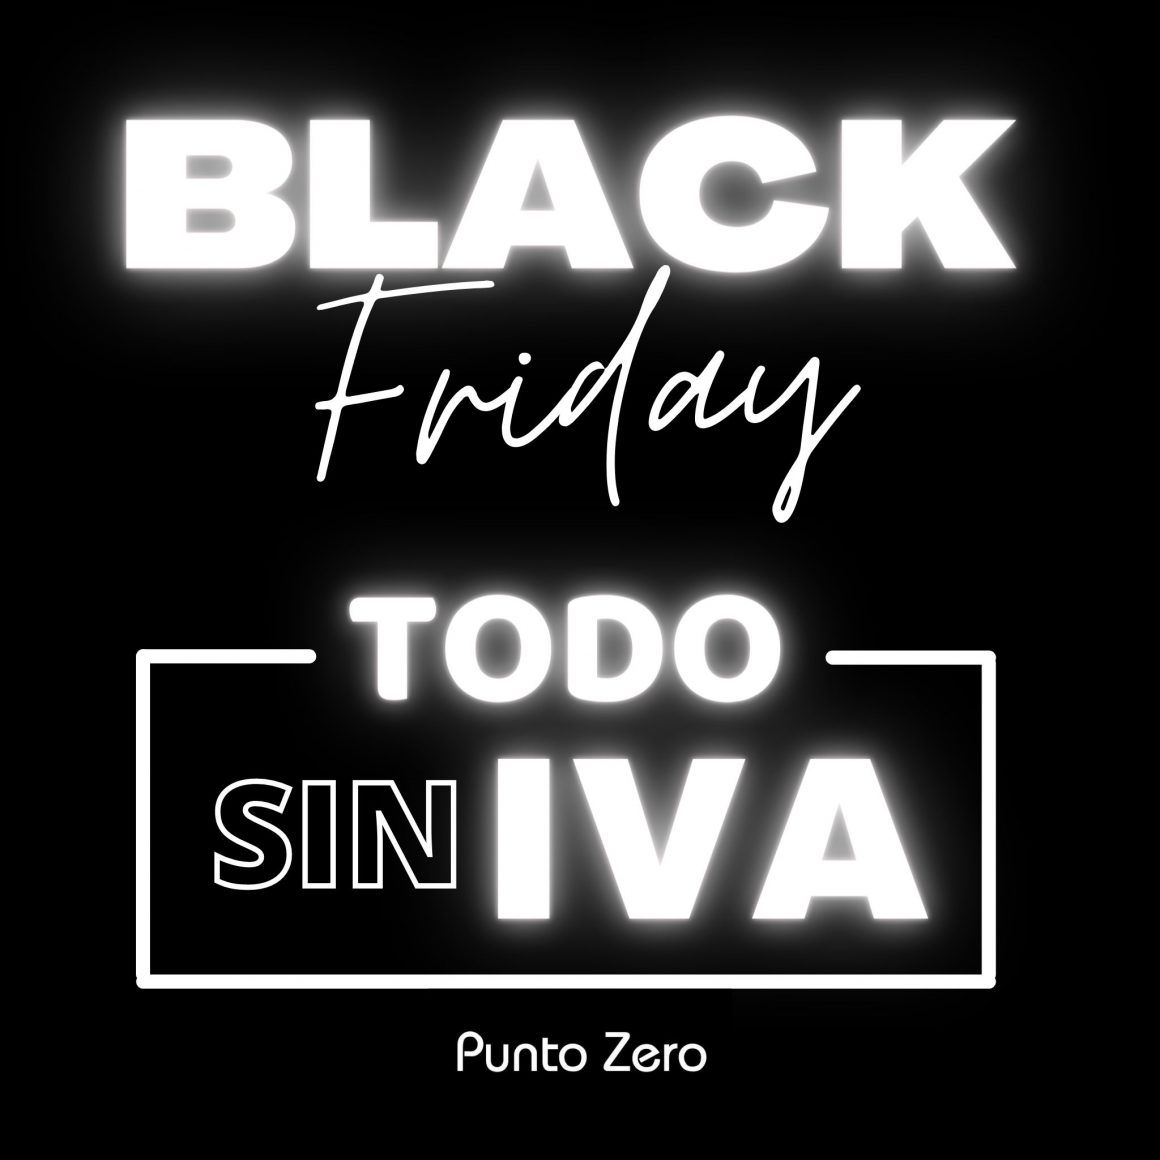 Black Friday en Punto Zero